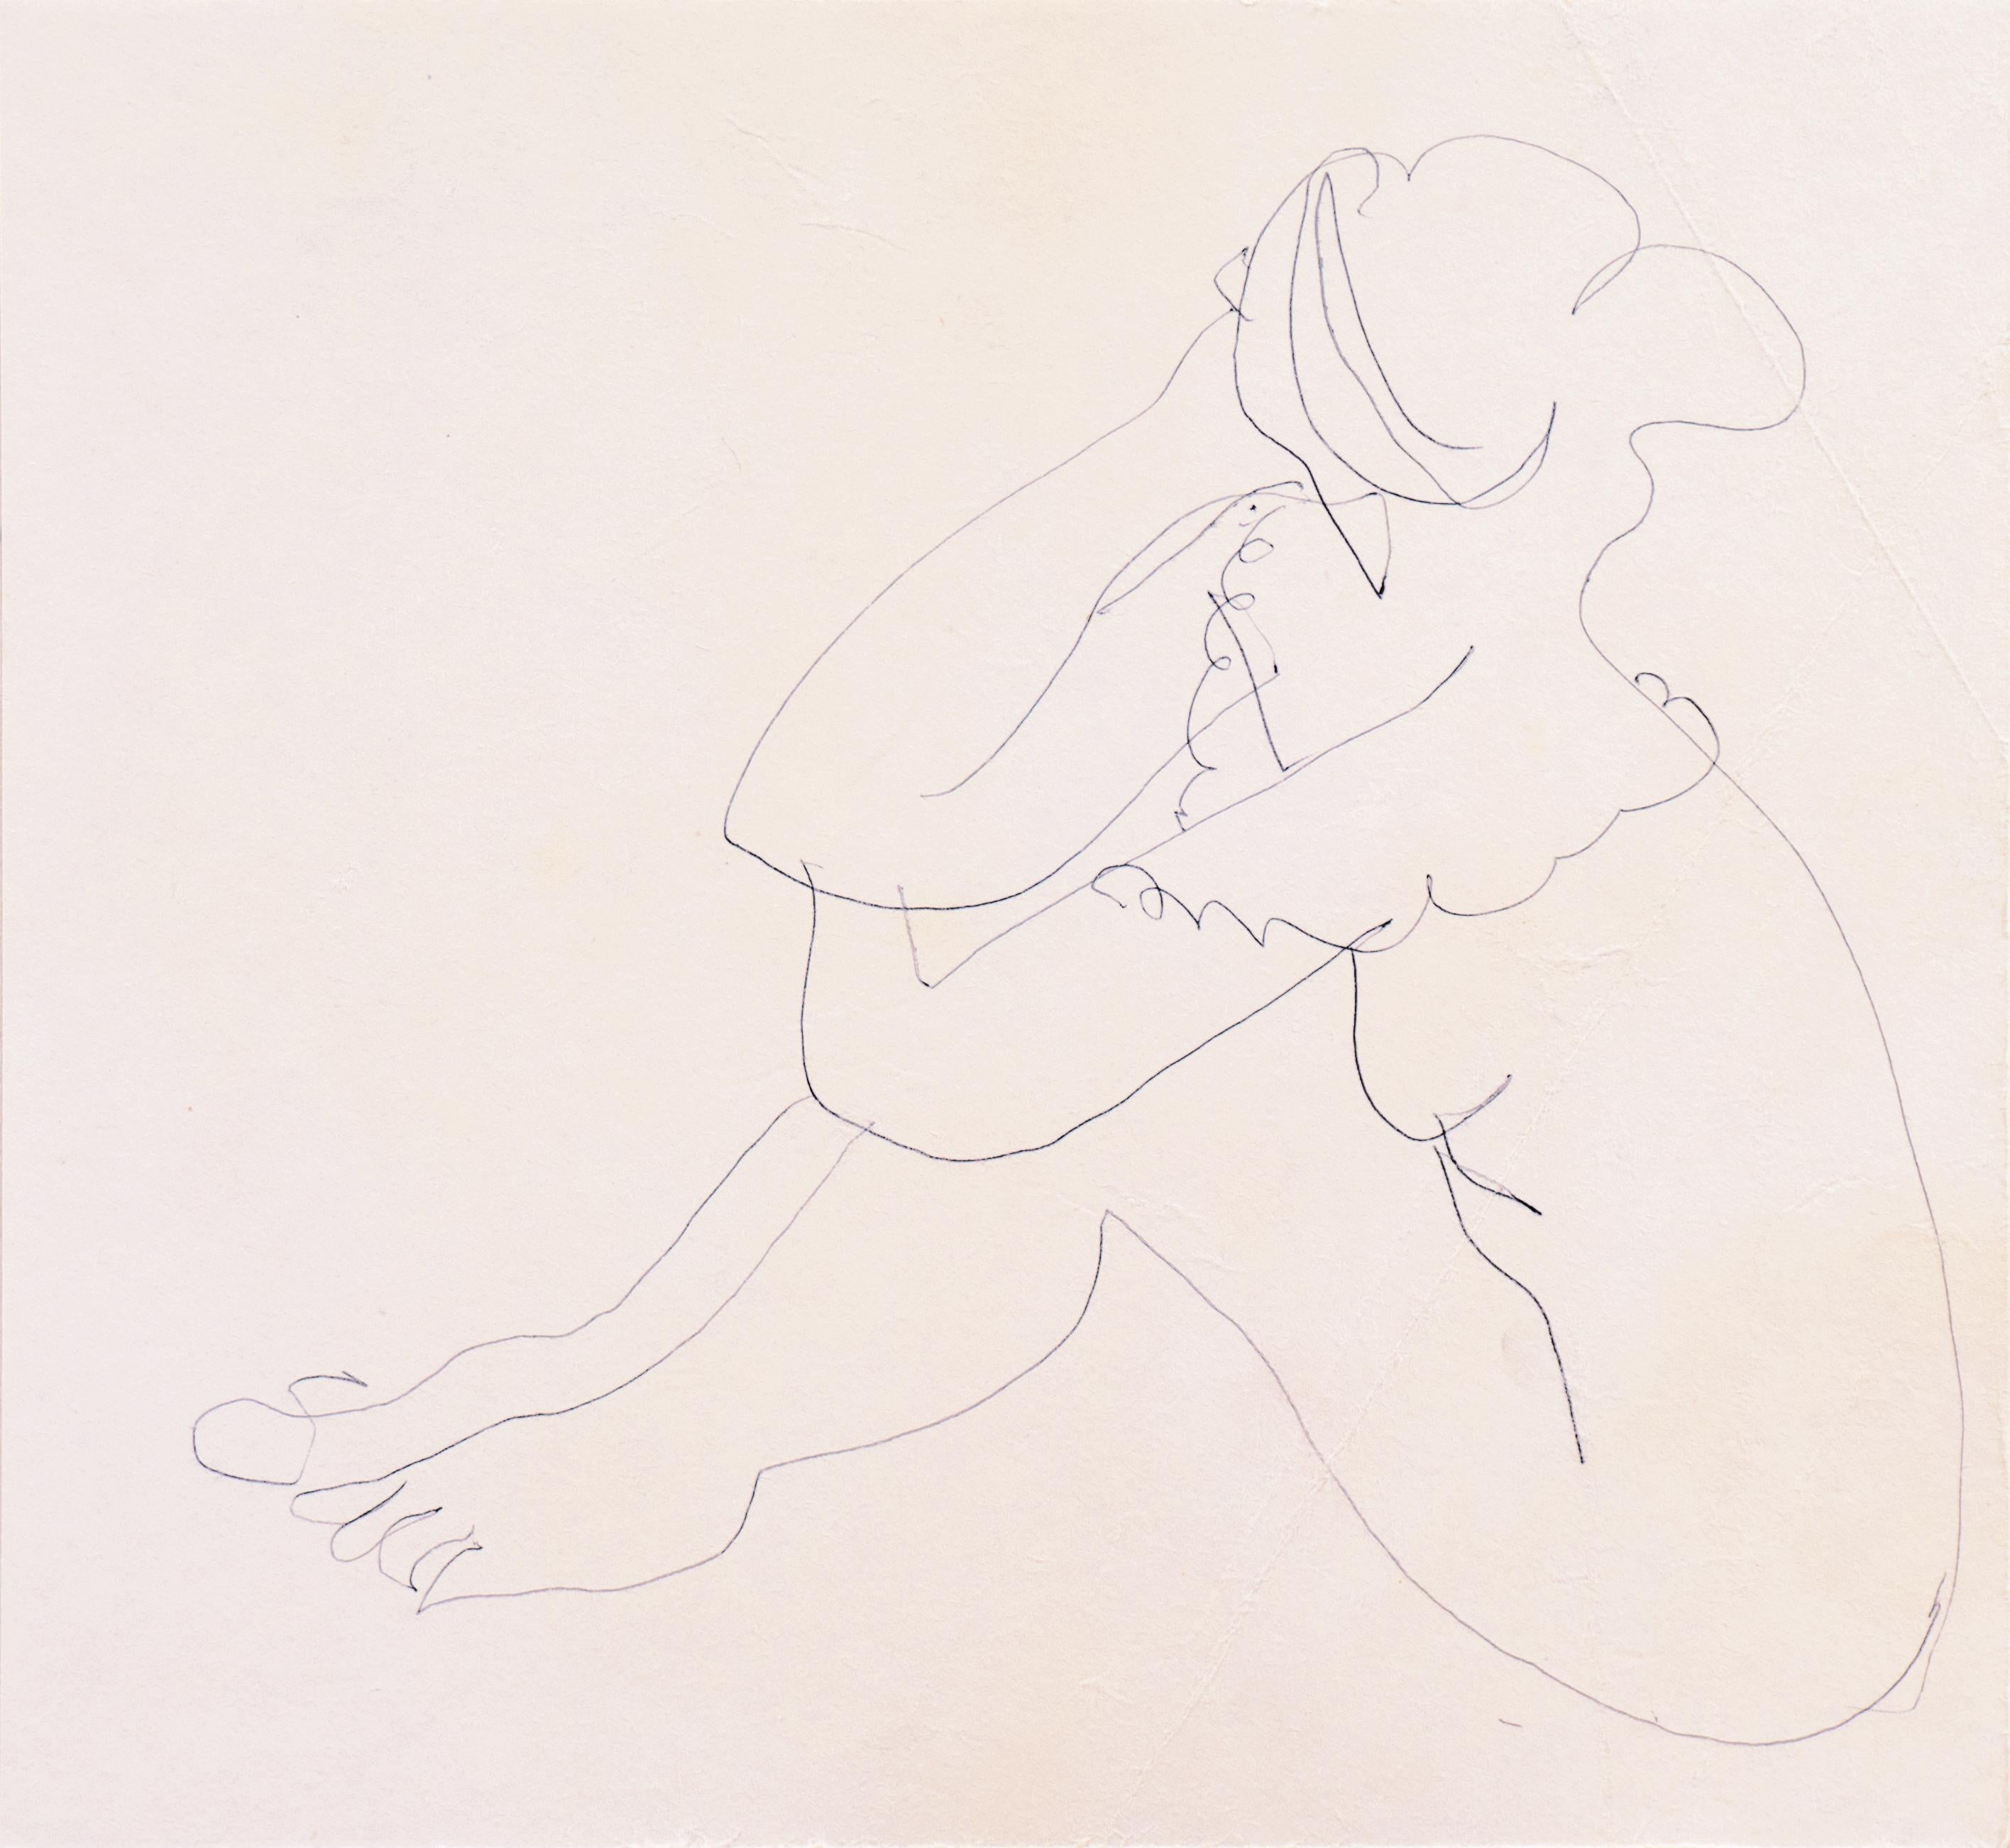 'Seated Nude' Paris, Louvre, Salon d'Automne, Académie Chaumière, LACMA, SFAA - Art by Victor Di Gesu